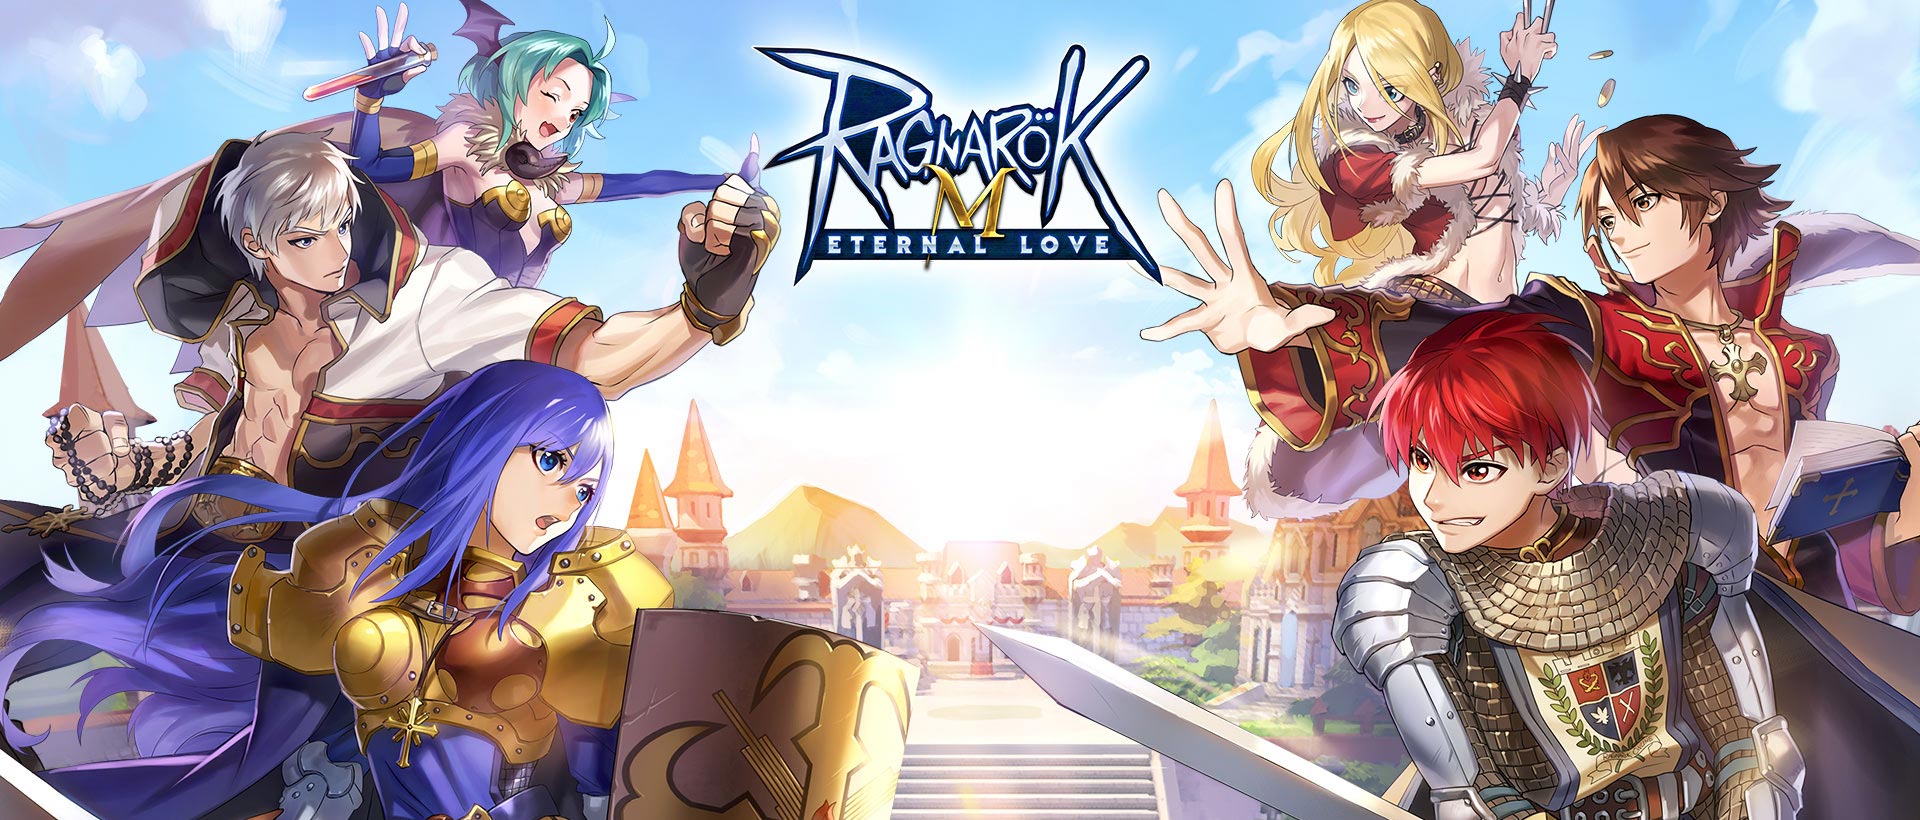 Download & Play Ragnarok M: Eternal Love on PC & Mac with NoxPlayer (Emulator)